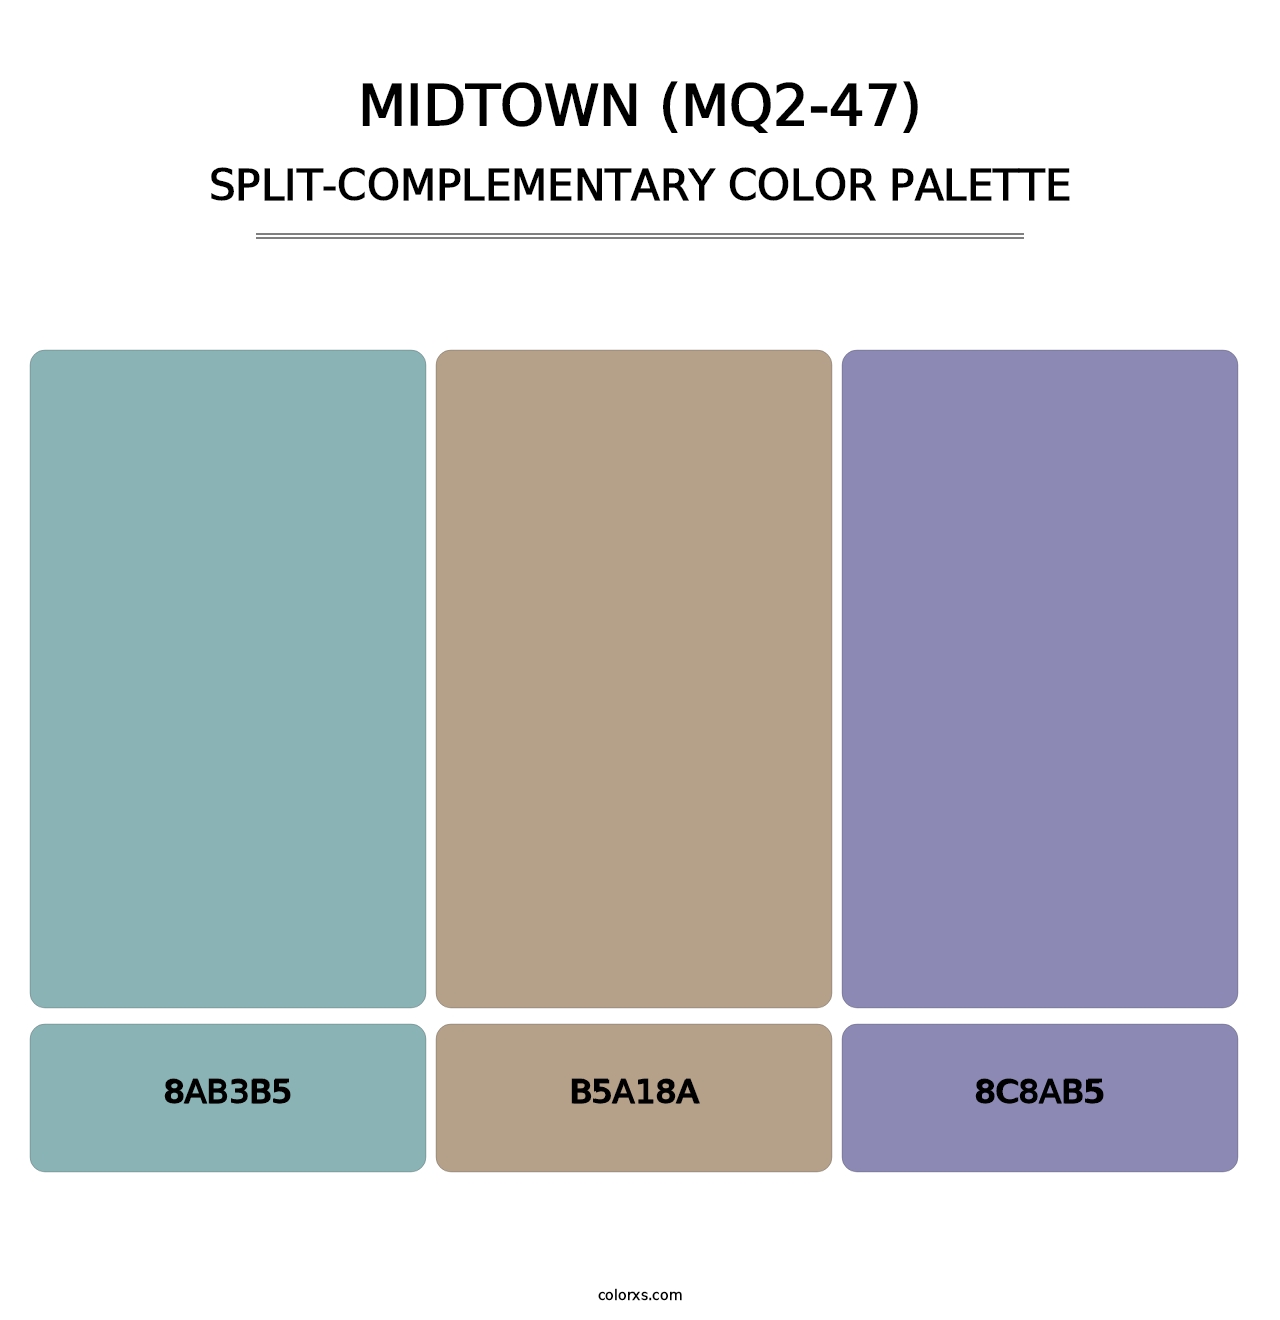 Midtown (MQ2-47) - Split-Complementary Color Palette